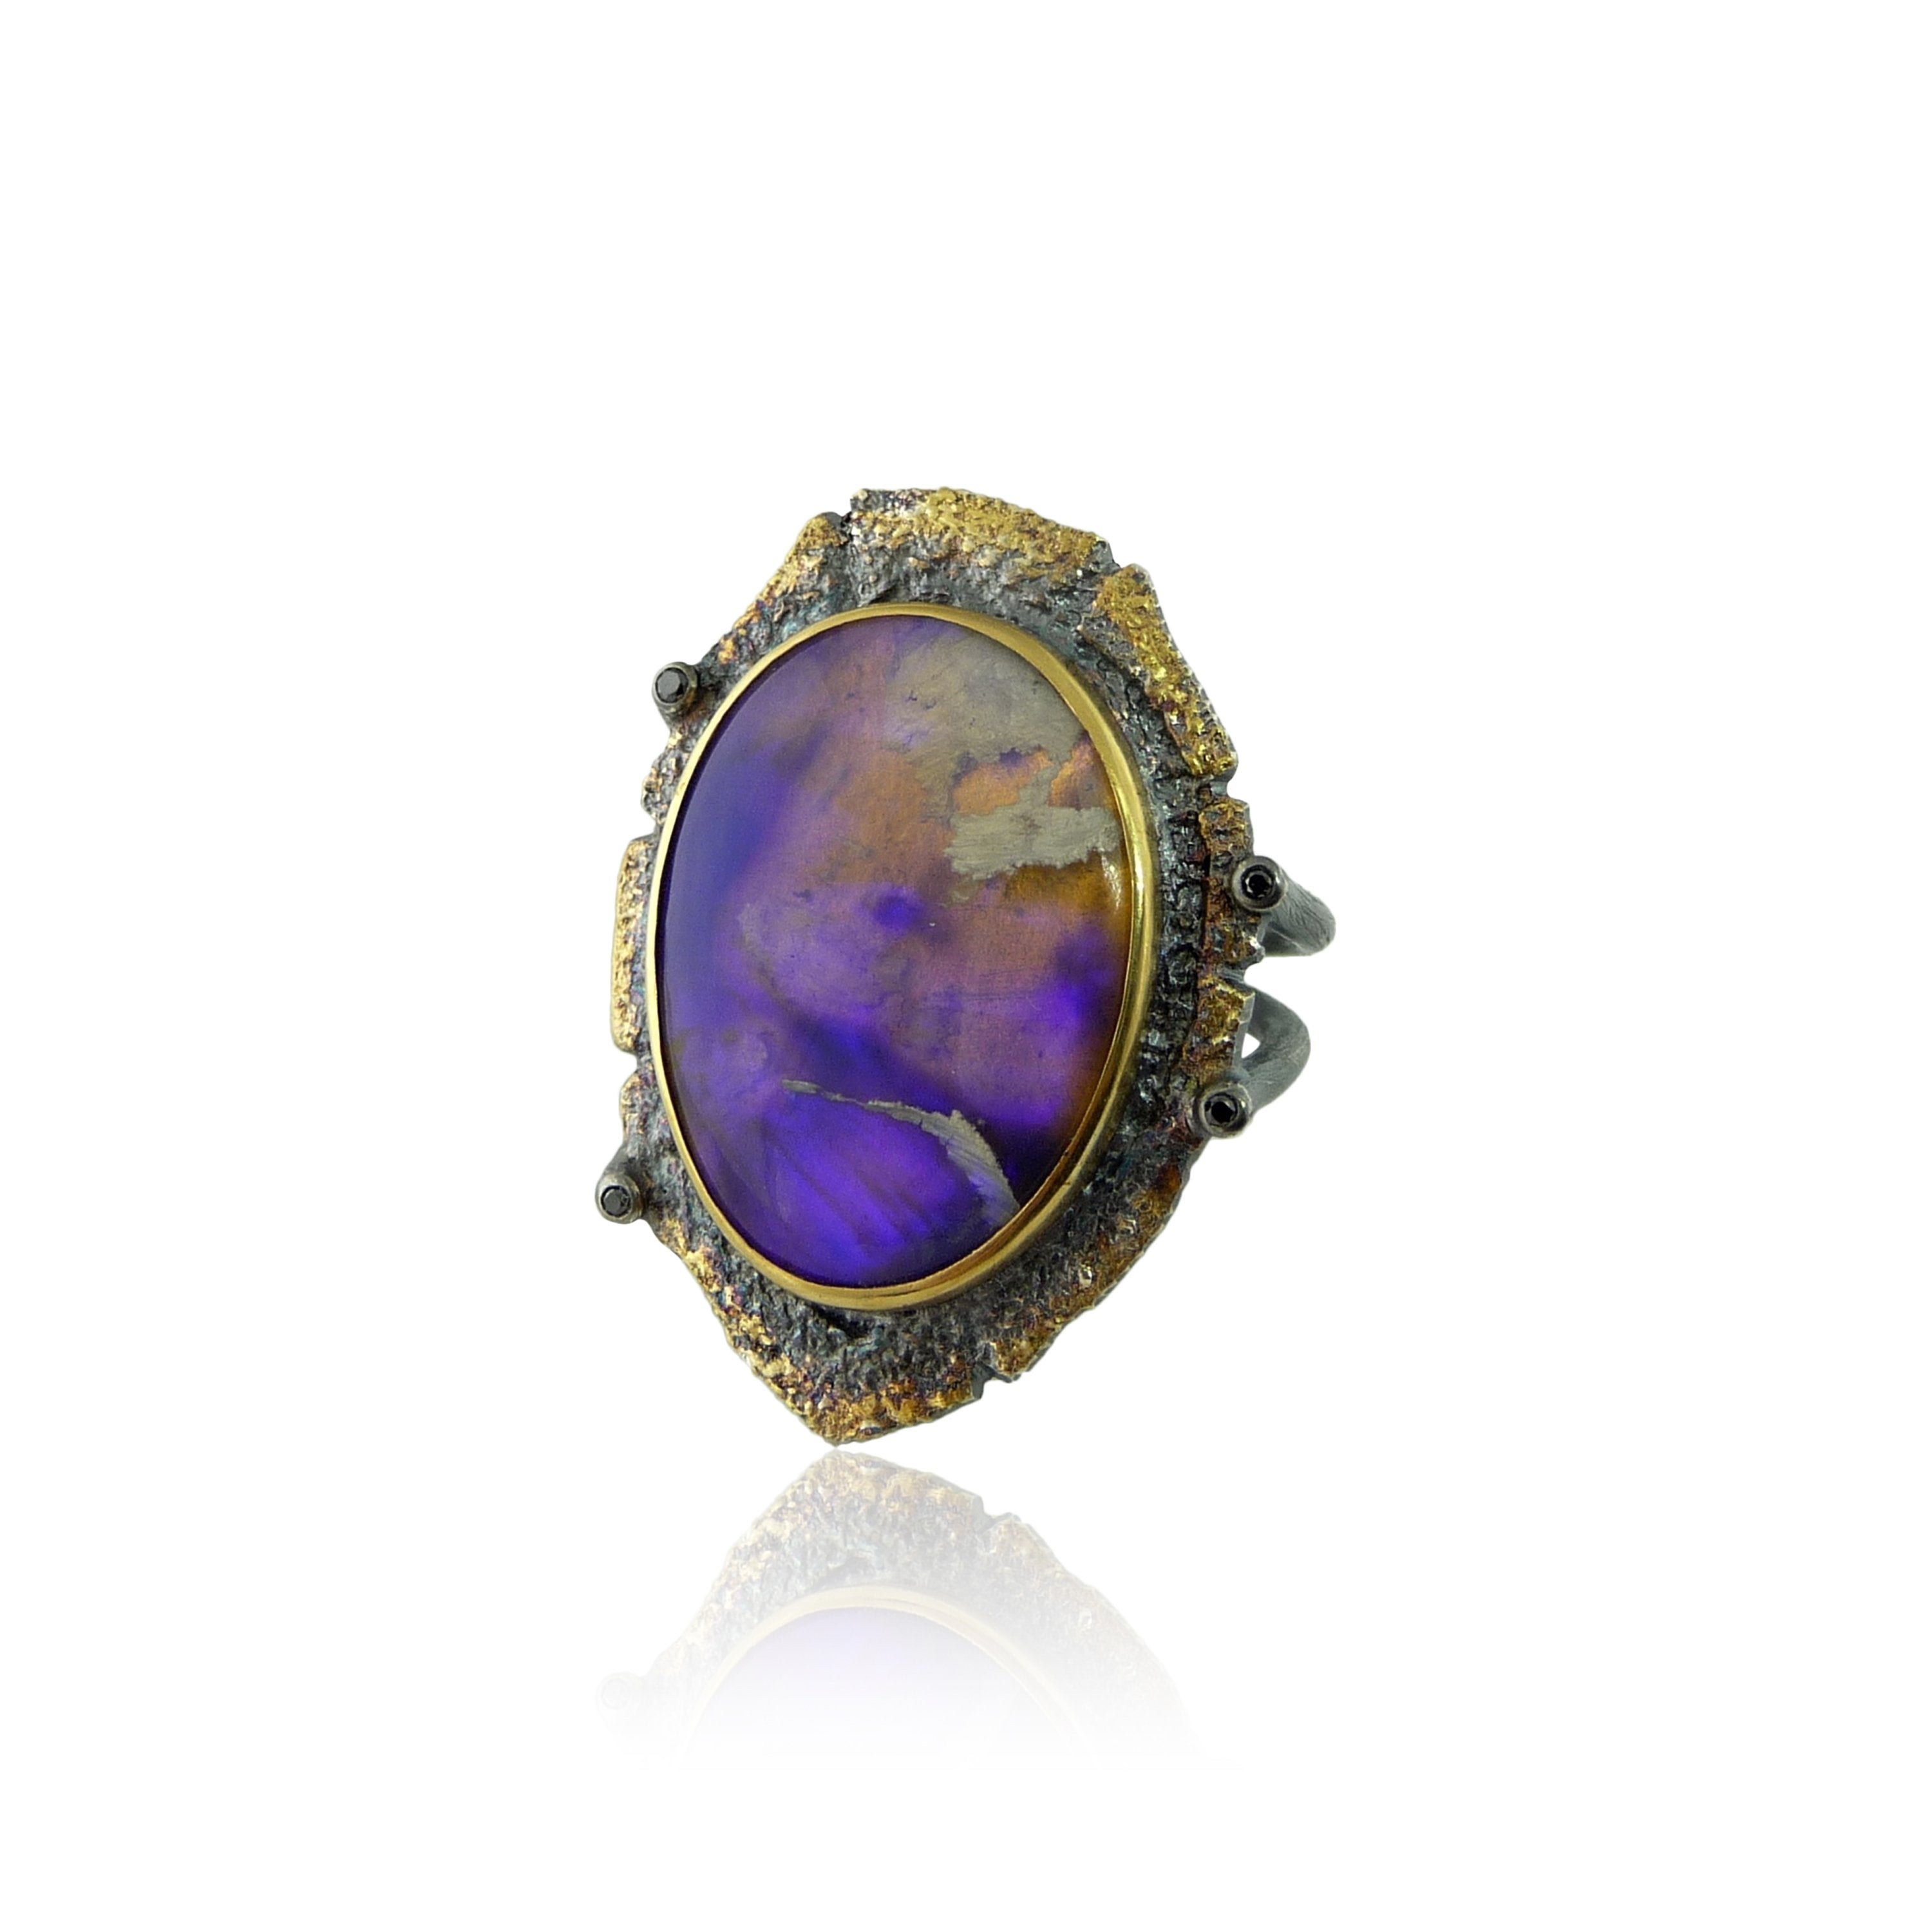 Opal Stone 101: History, Symbolism, and Uses - Australian Opal Direct